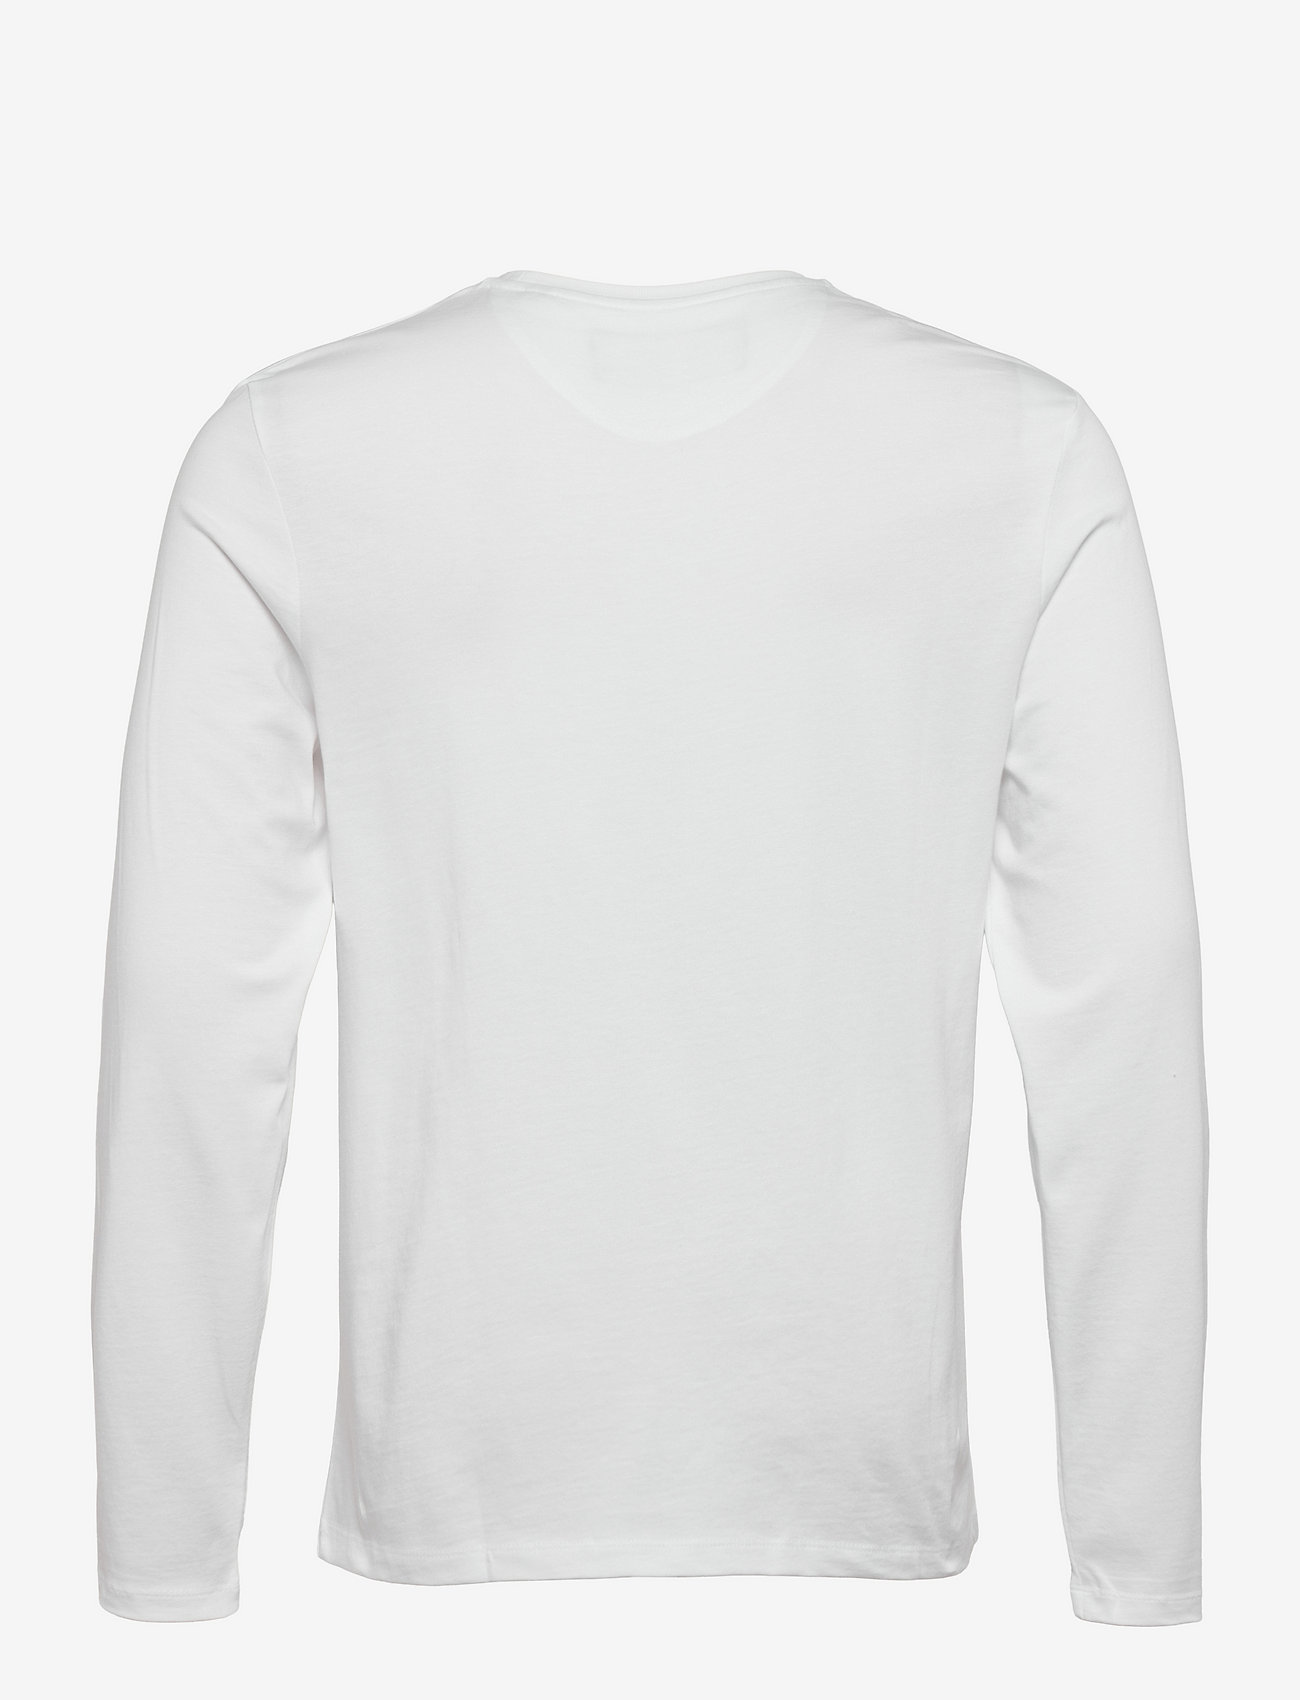 Lyle & Scott - Plain L/S T-Shirt - podstawowe koszulki - white - 1